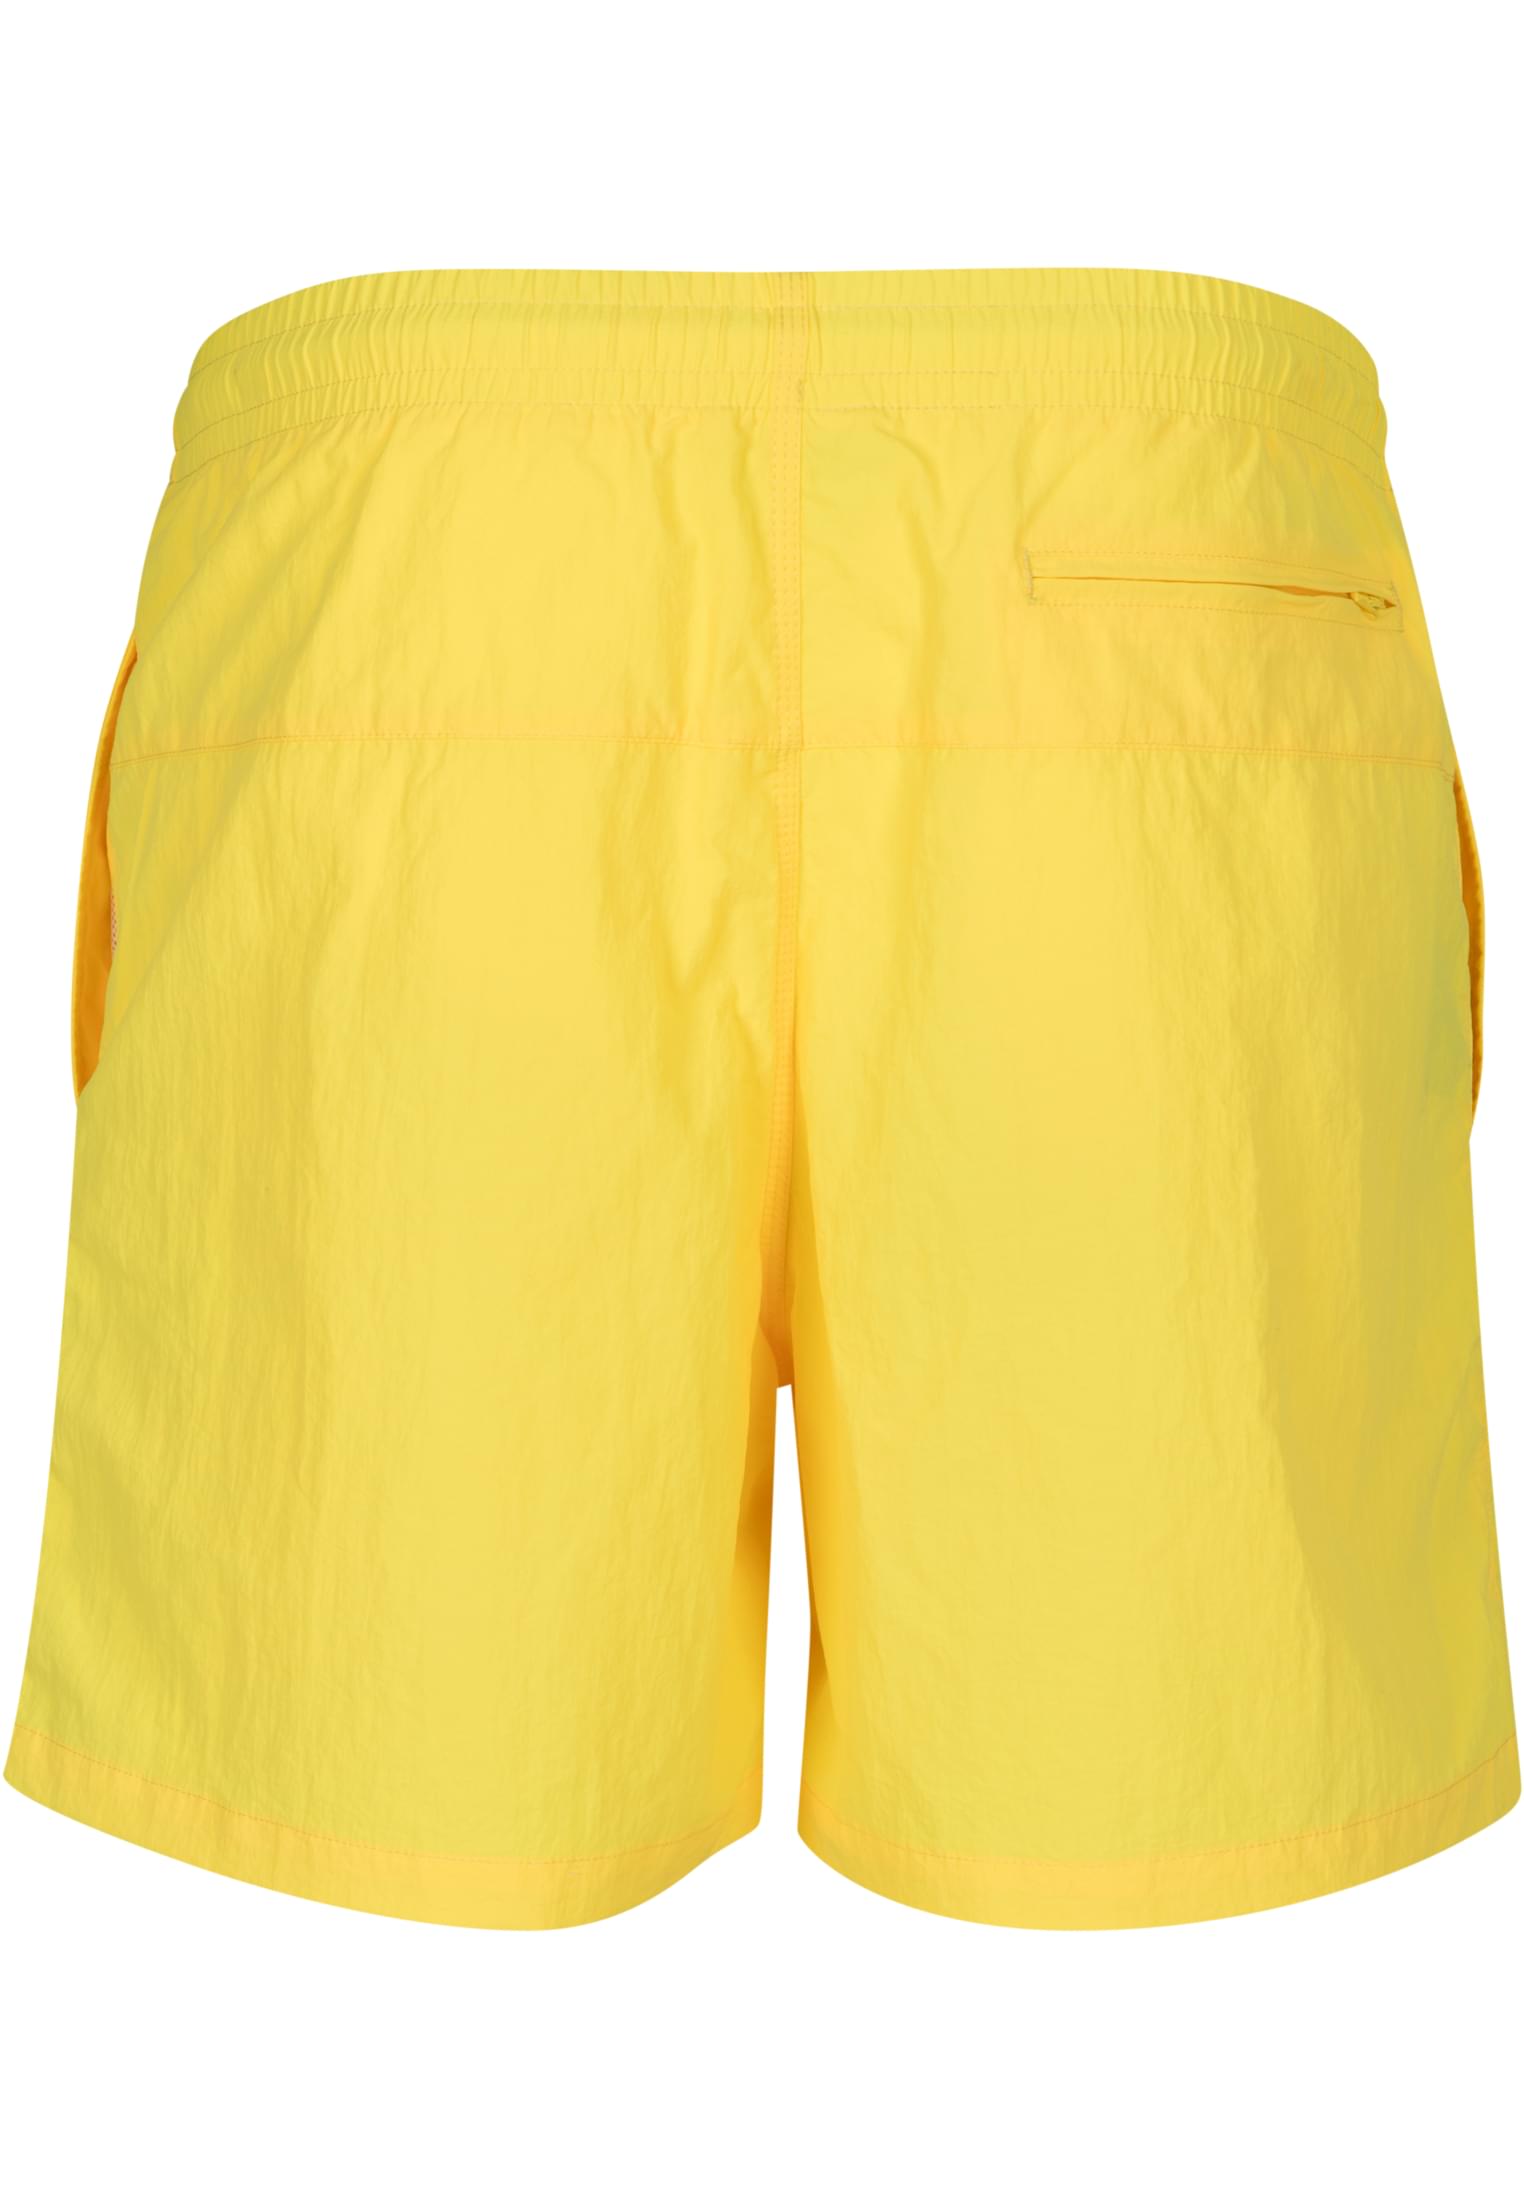 Plus Size Block Swim Shorts in Farbe neonyellow